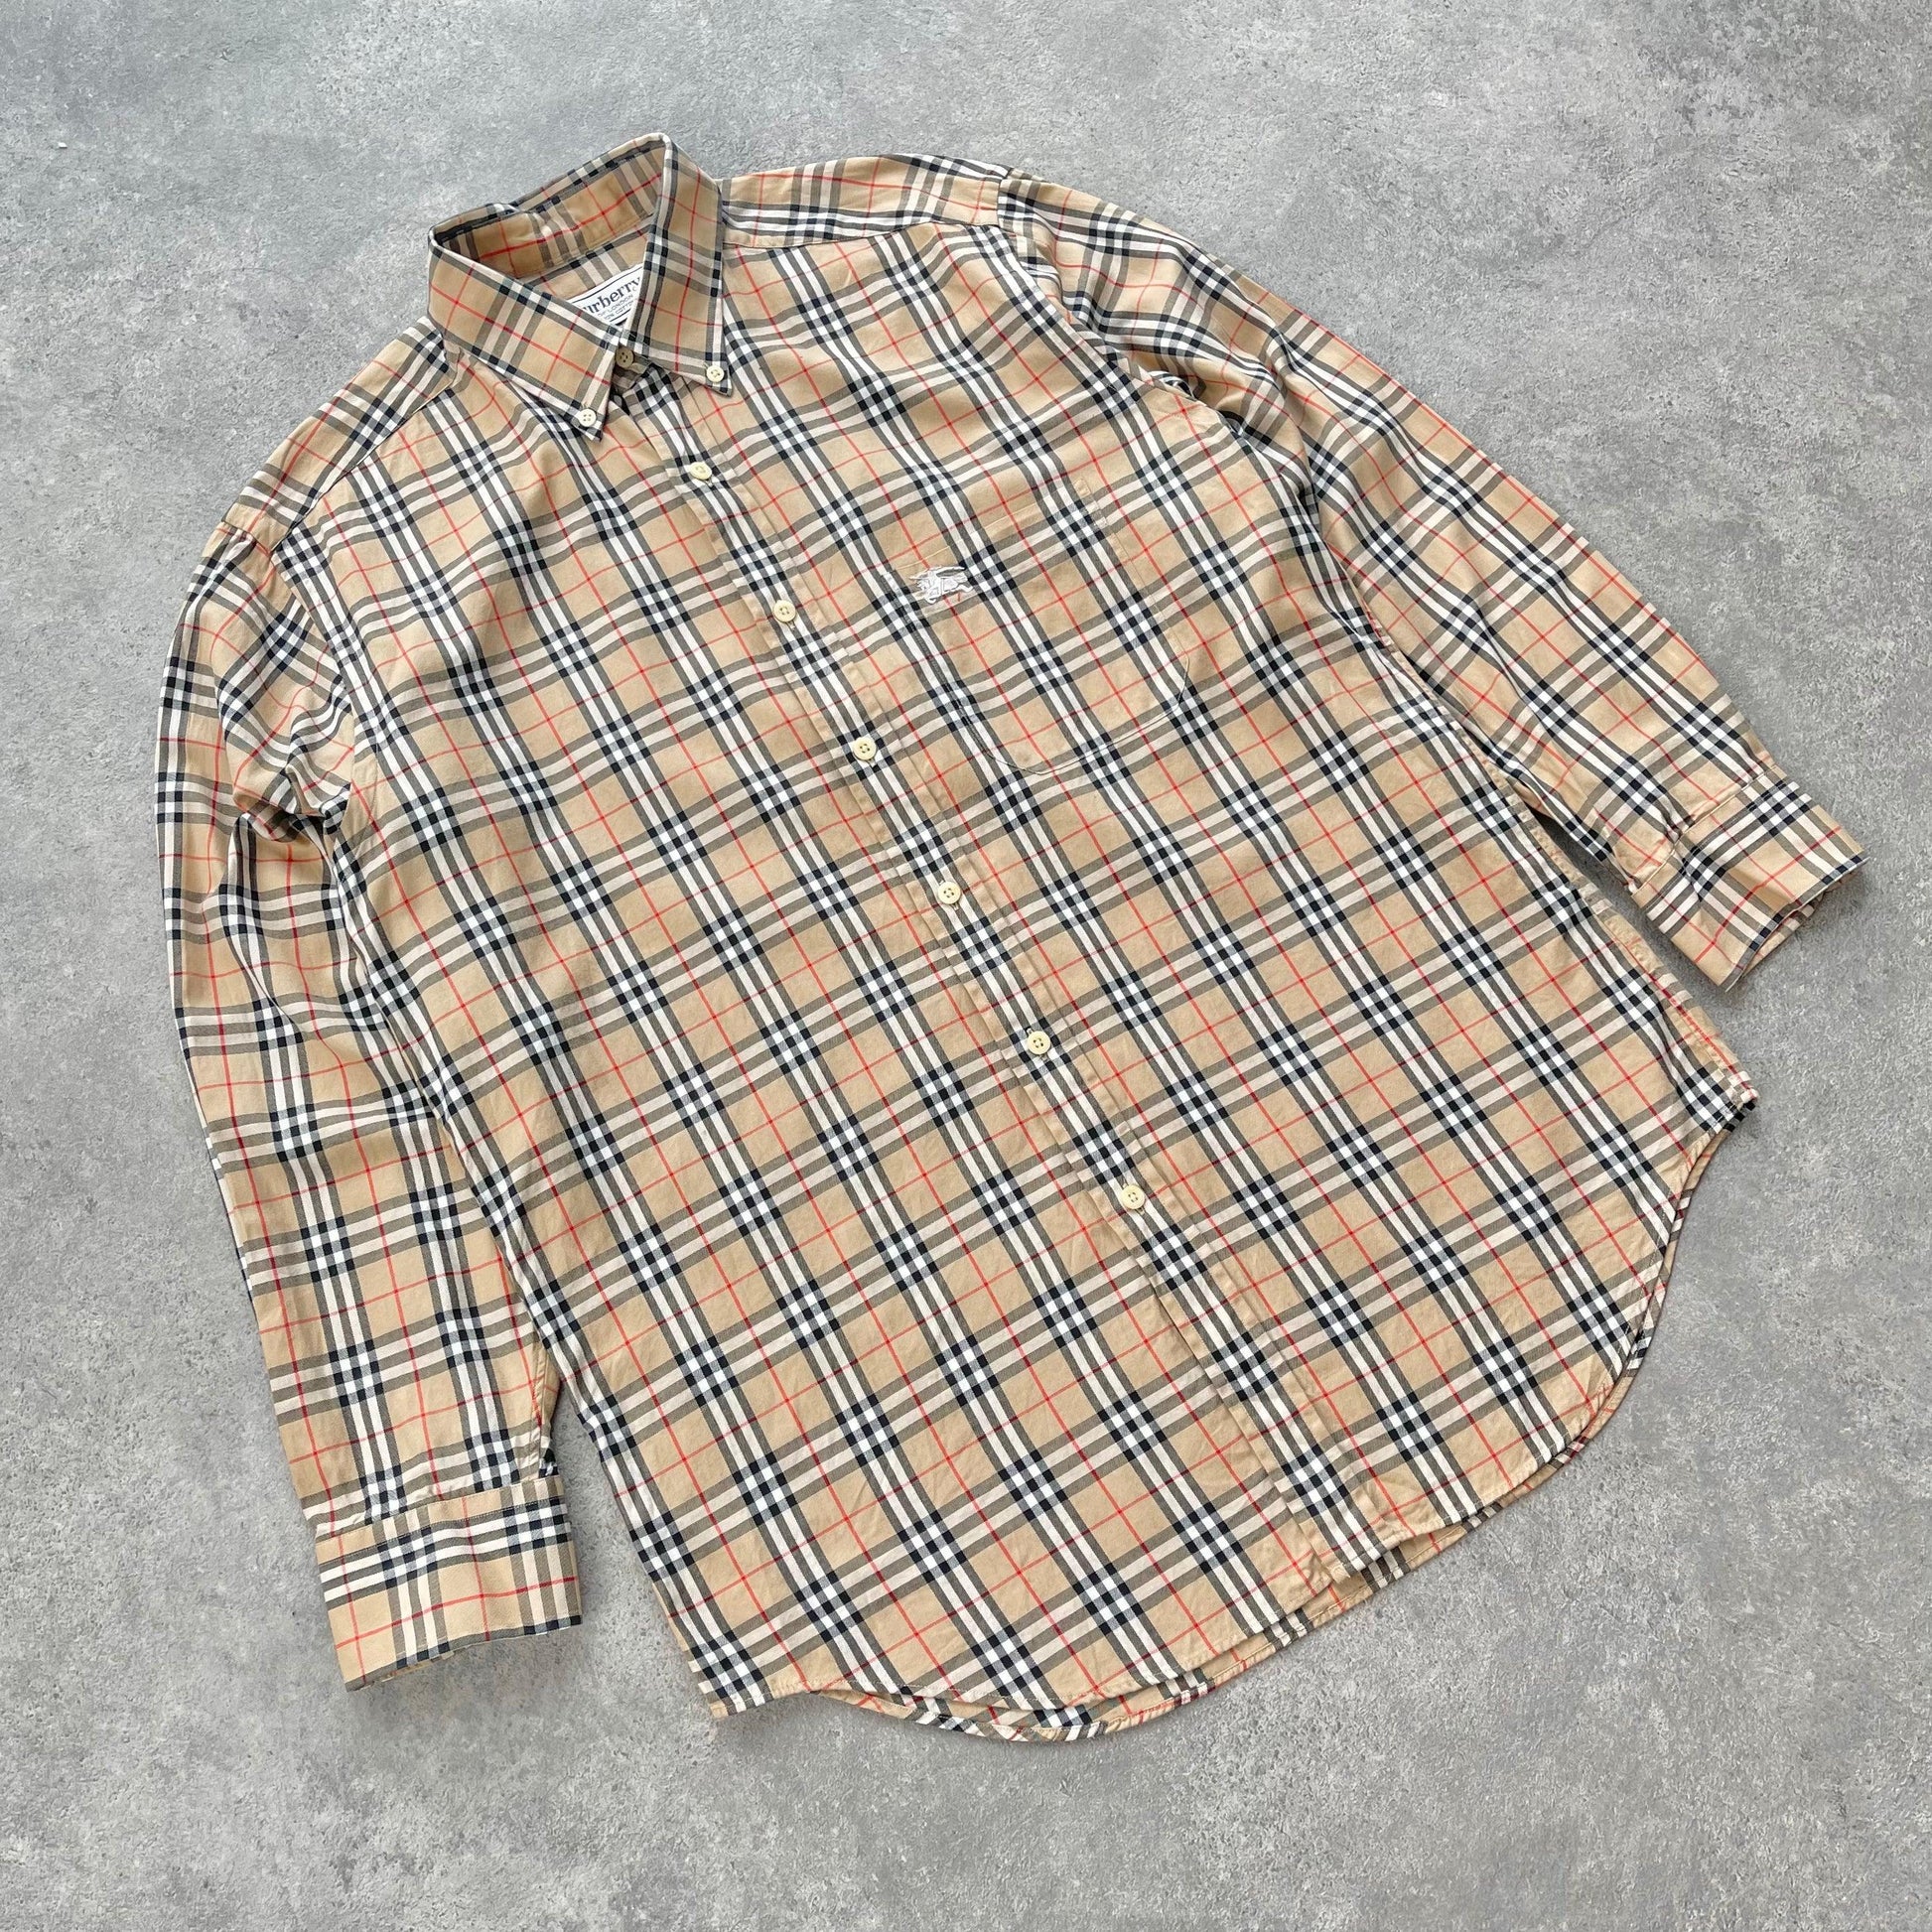 Burberry’s 1990s nova check shirt (M) - Known Source